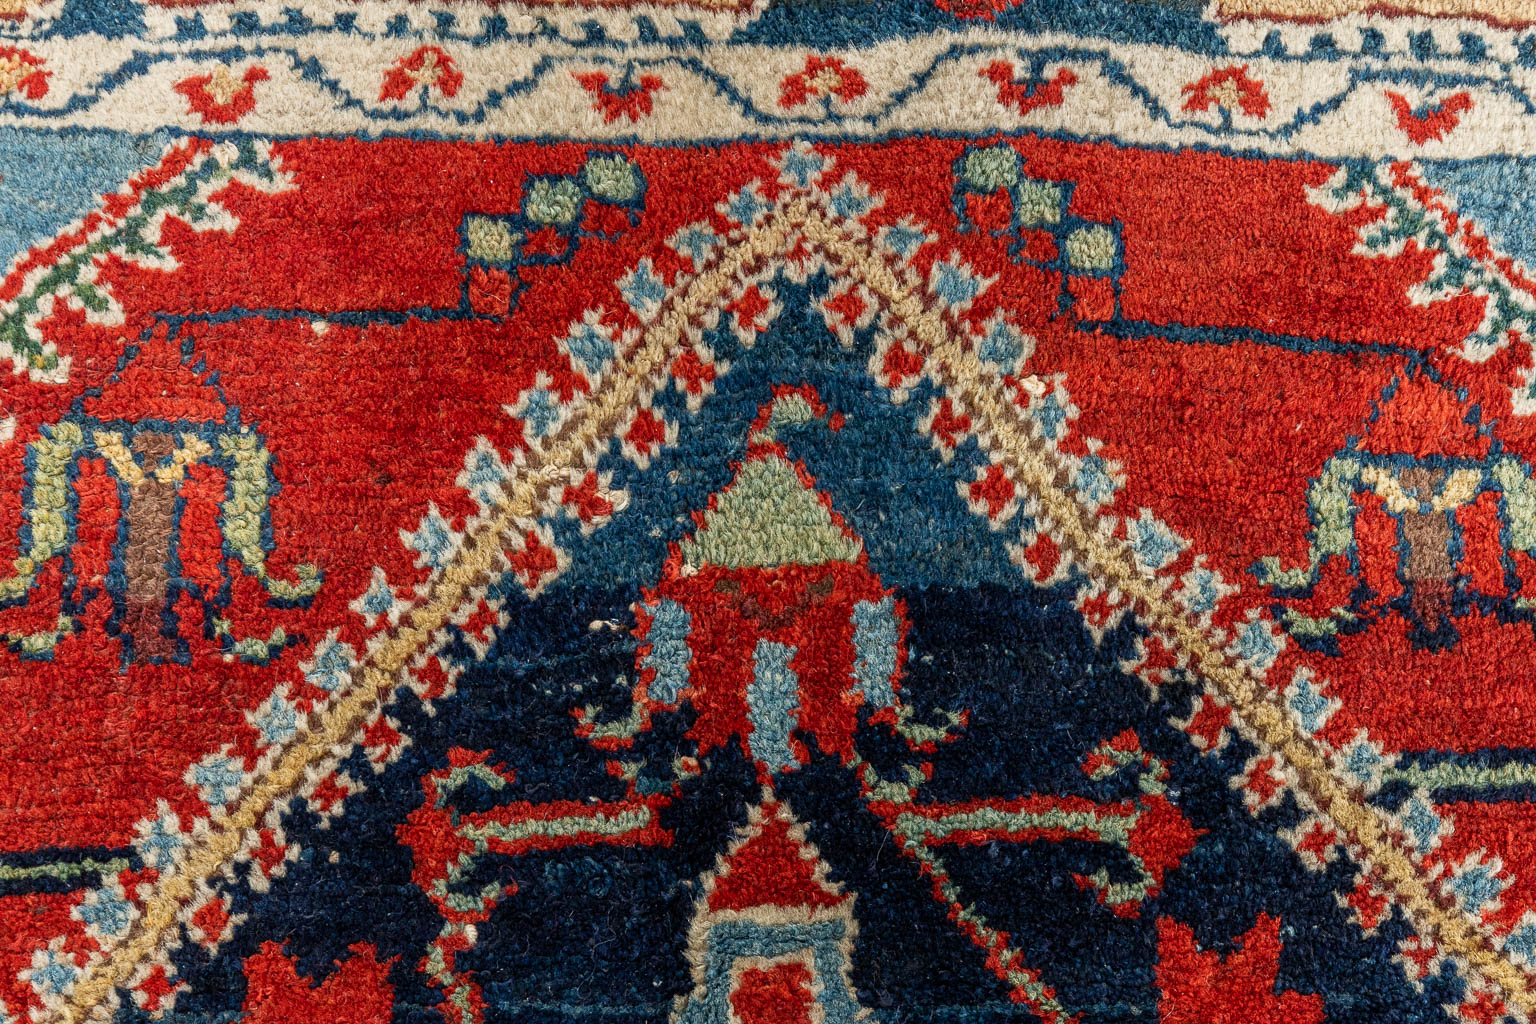 An Oriental hand-made carpet, Jozan Sarouk (D:190 x W:127 cm)